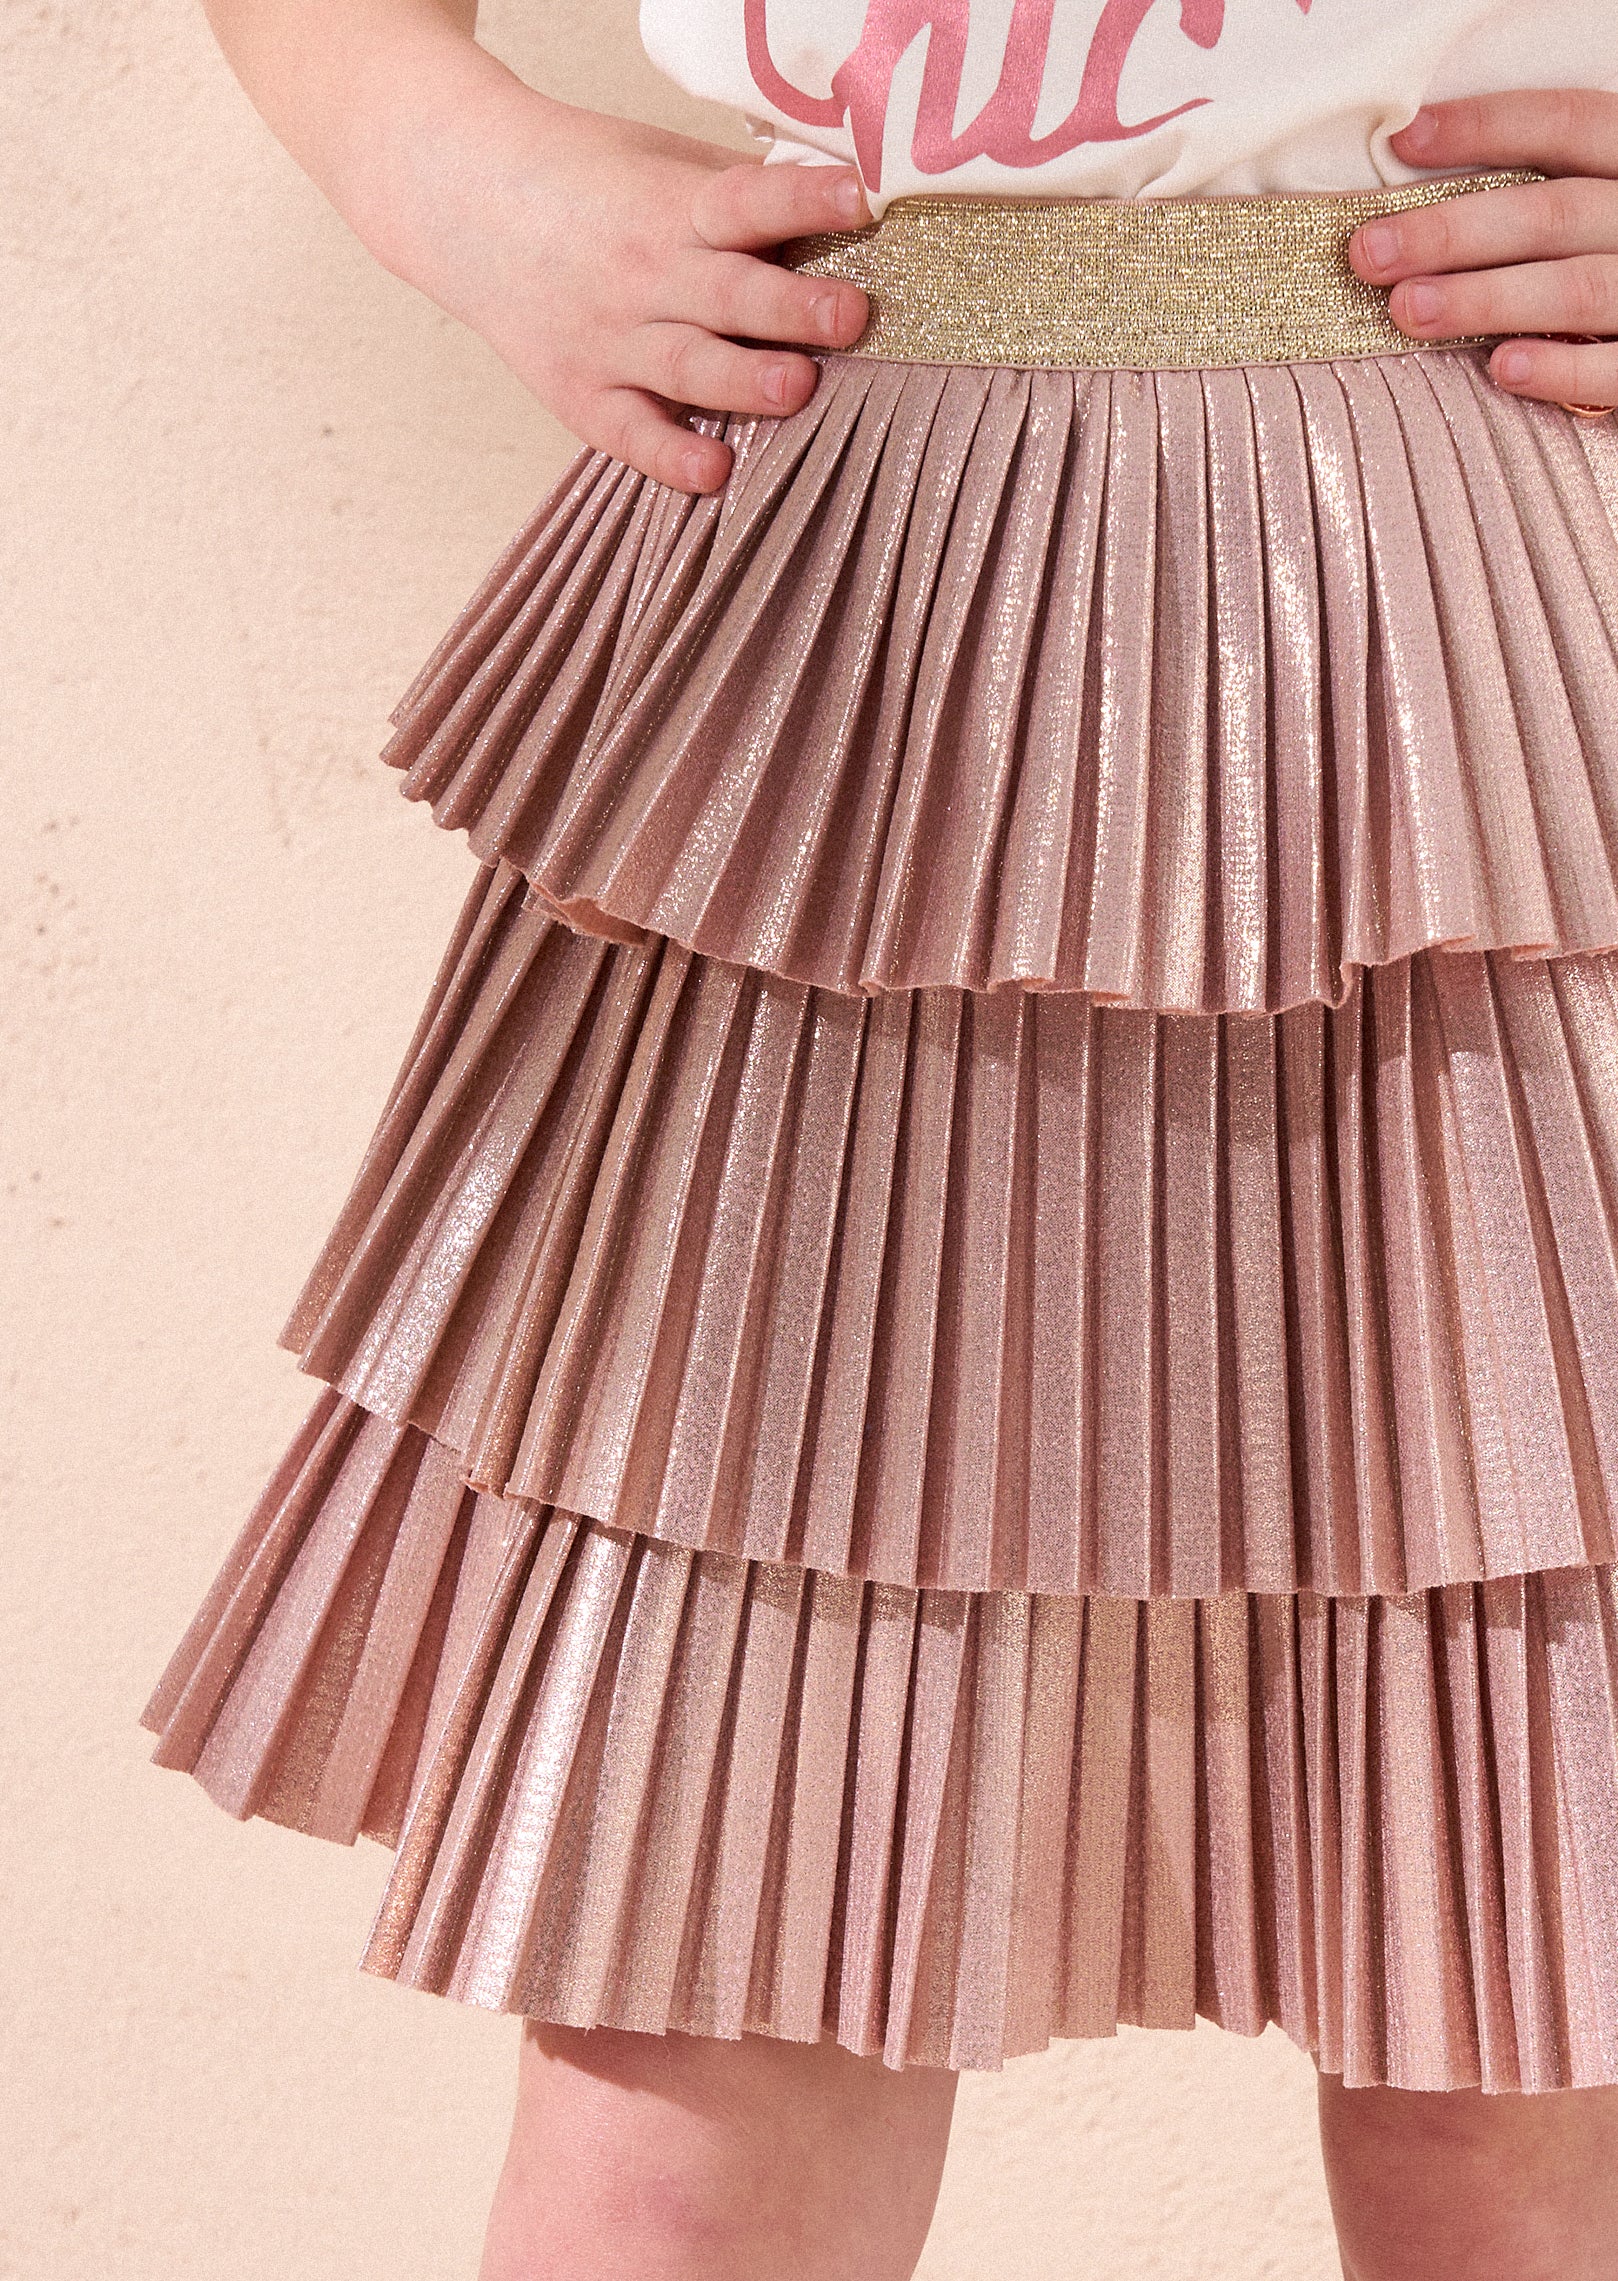 Lucile Copper Metallic Pleated Skirt